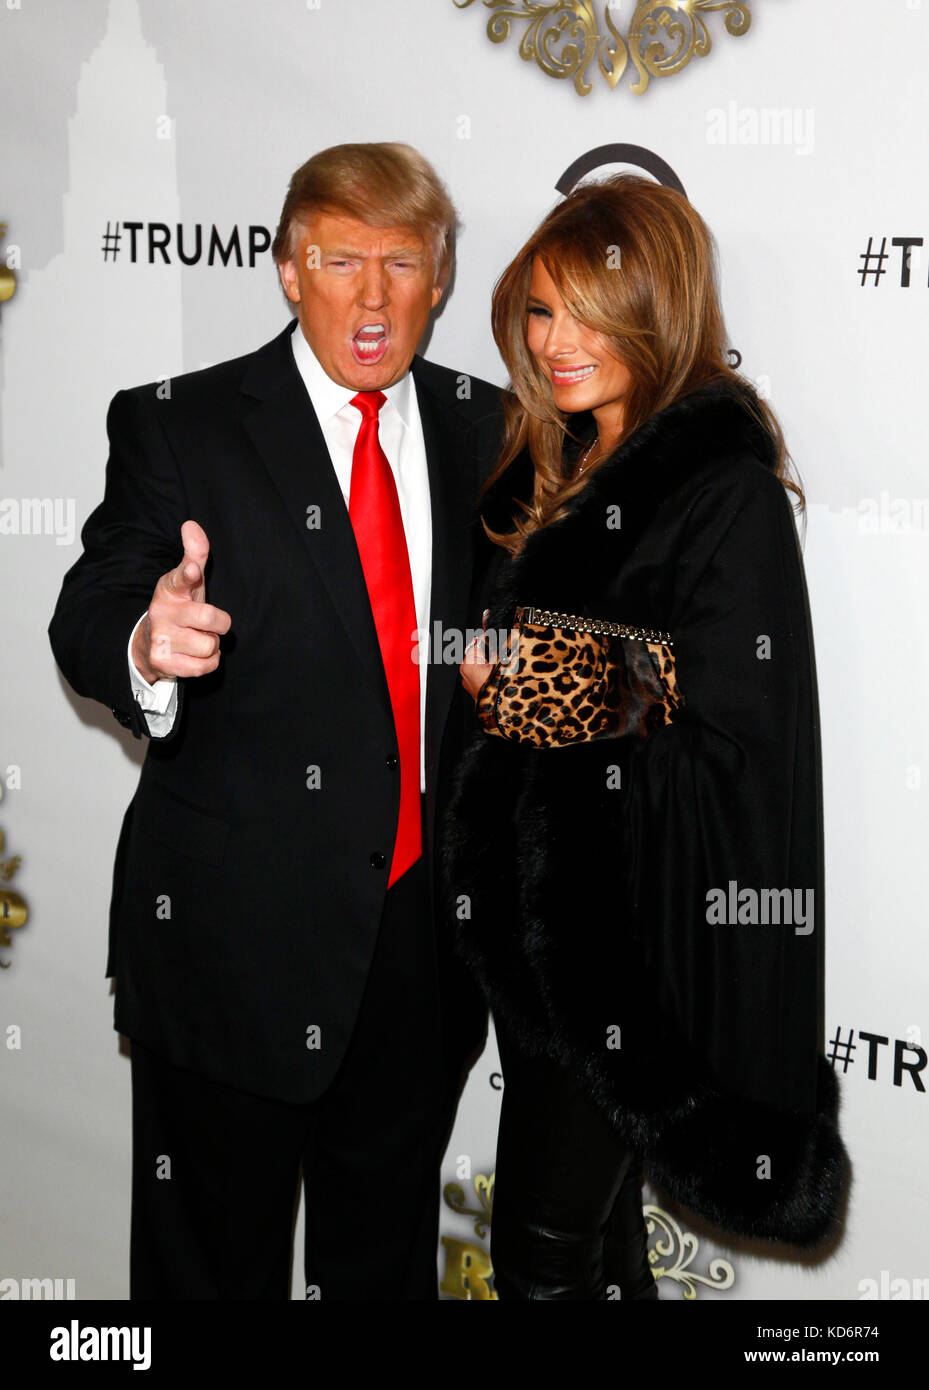 Donald Trump & Melania Trump pictured at the 